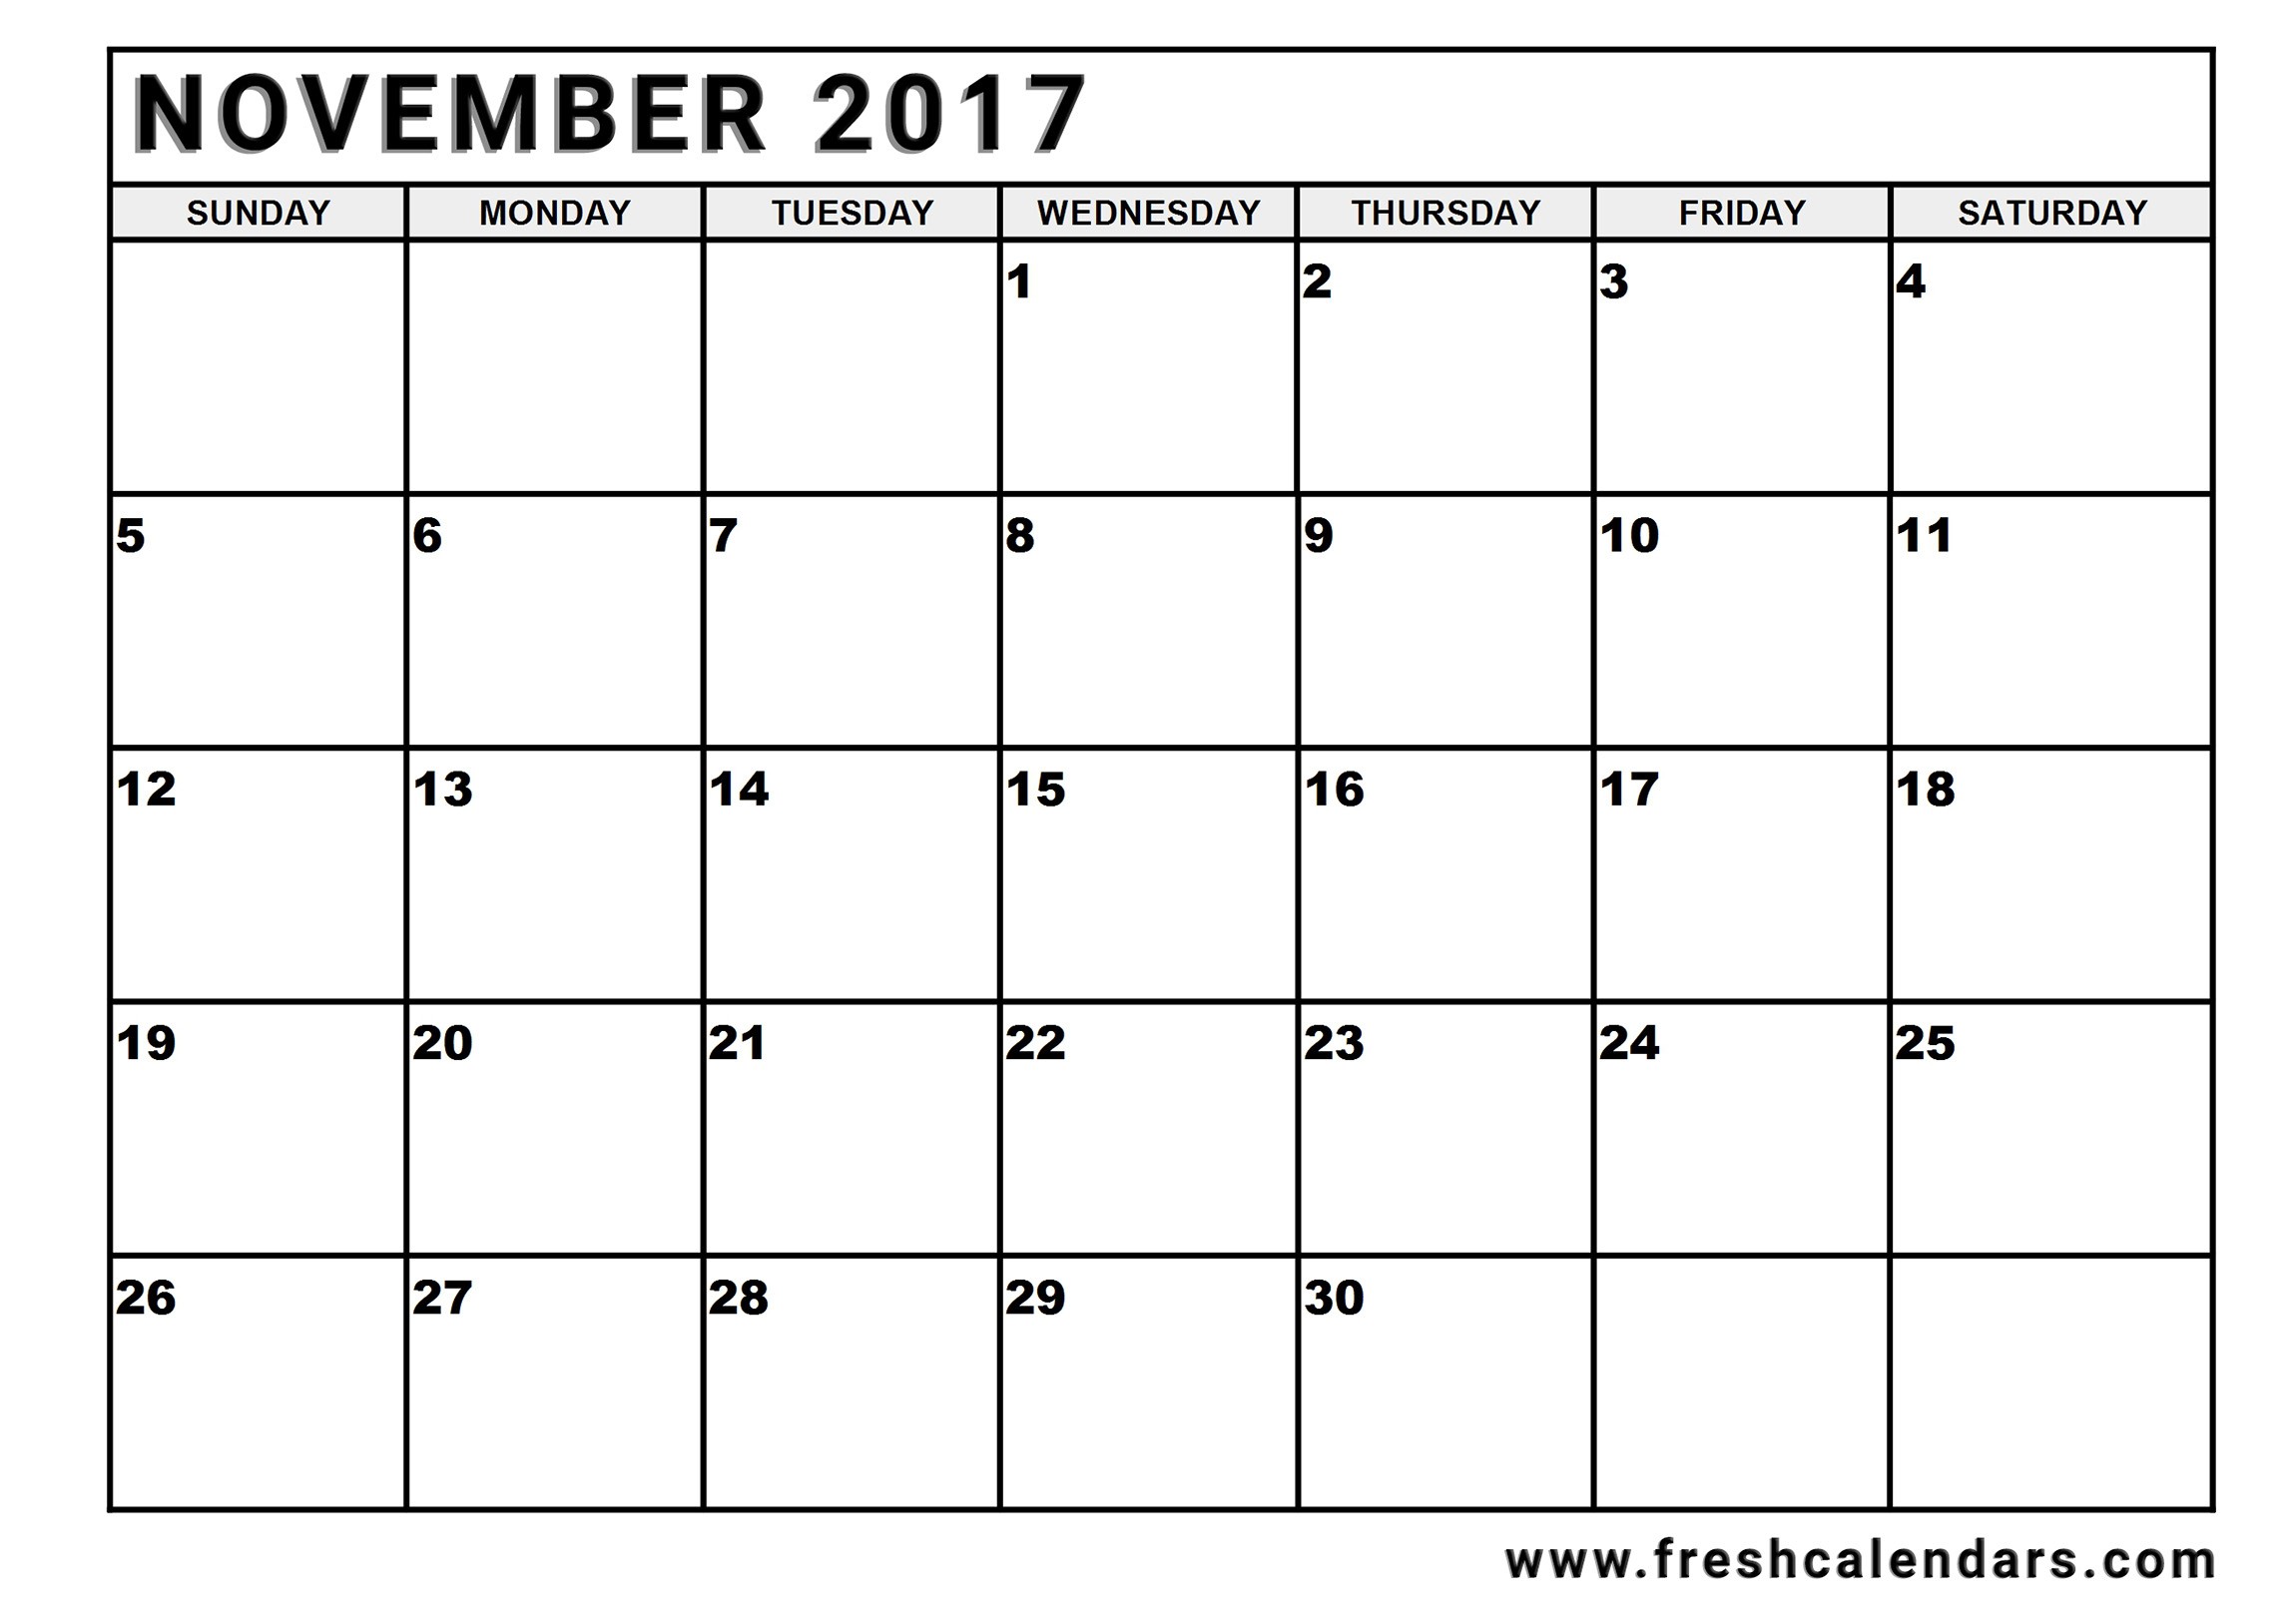 Calendar Printable Monthly November 2017 Calendar Printable Template with Holidays